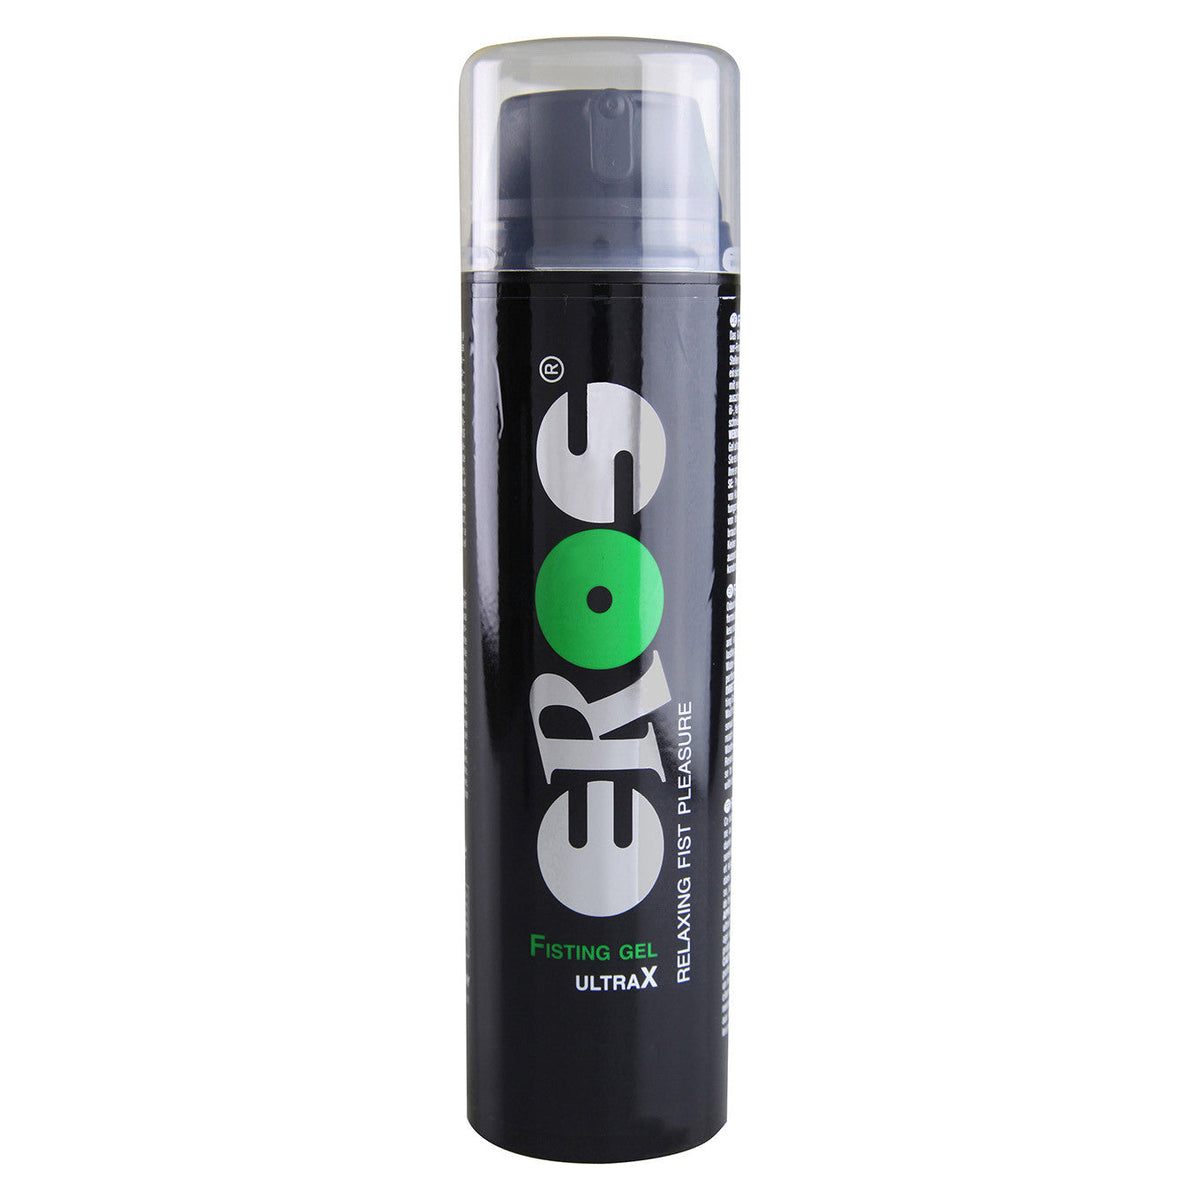 Eros - Fisting Gel Ultra X Lubricant 200ml -  Lube (Water Based)  Durio.sg